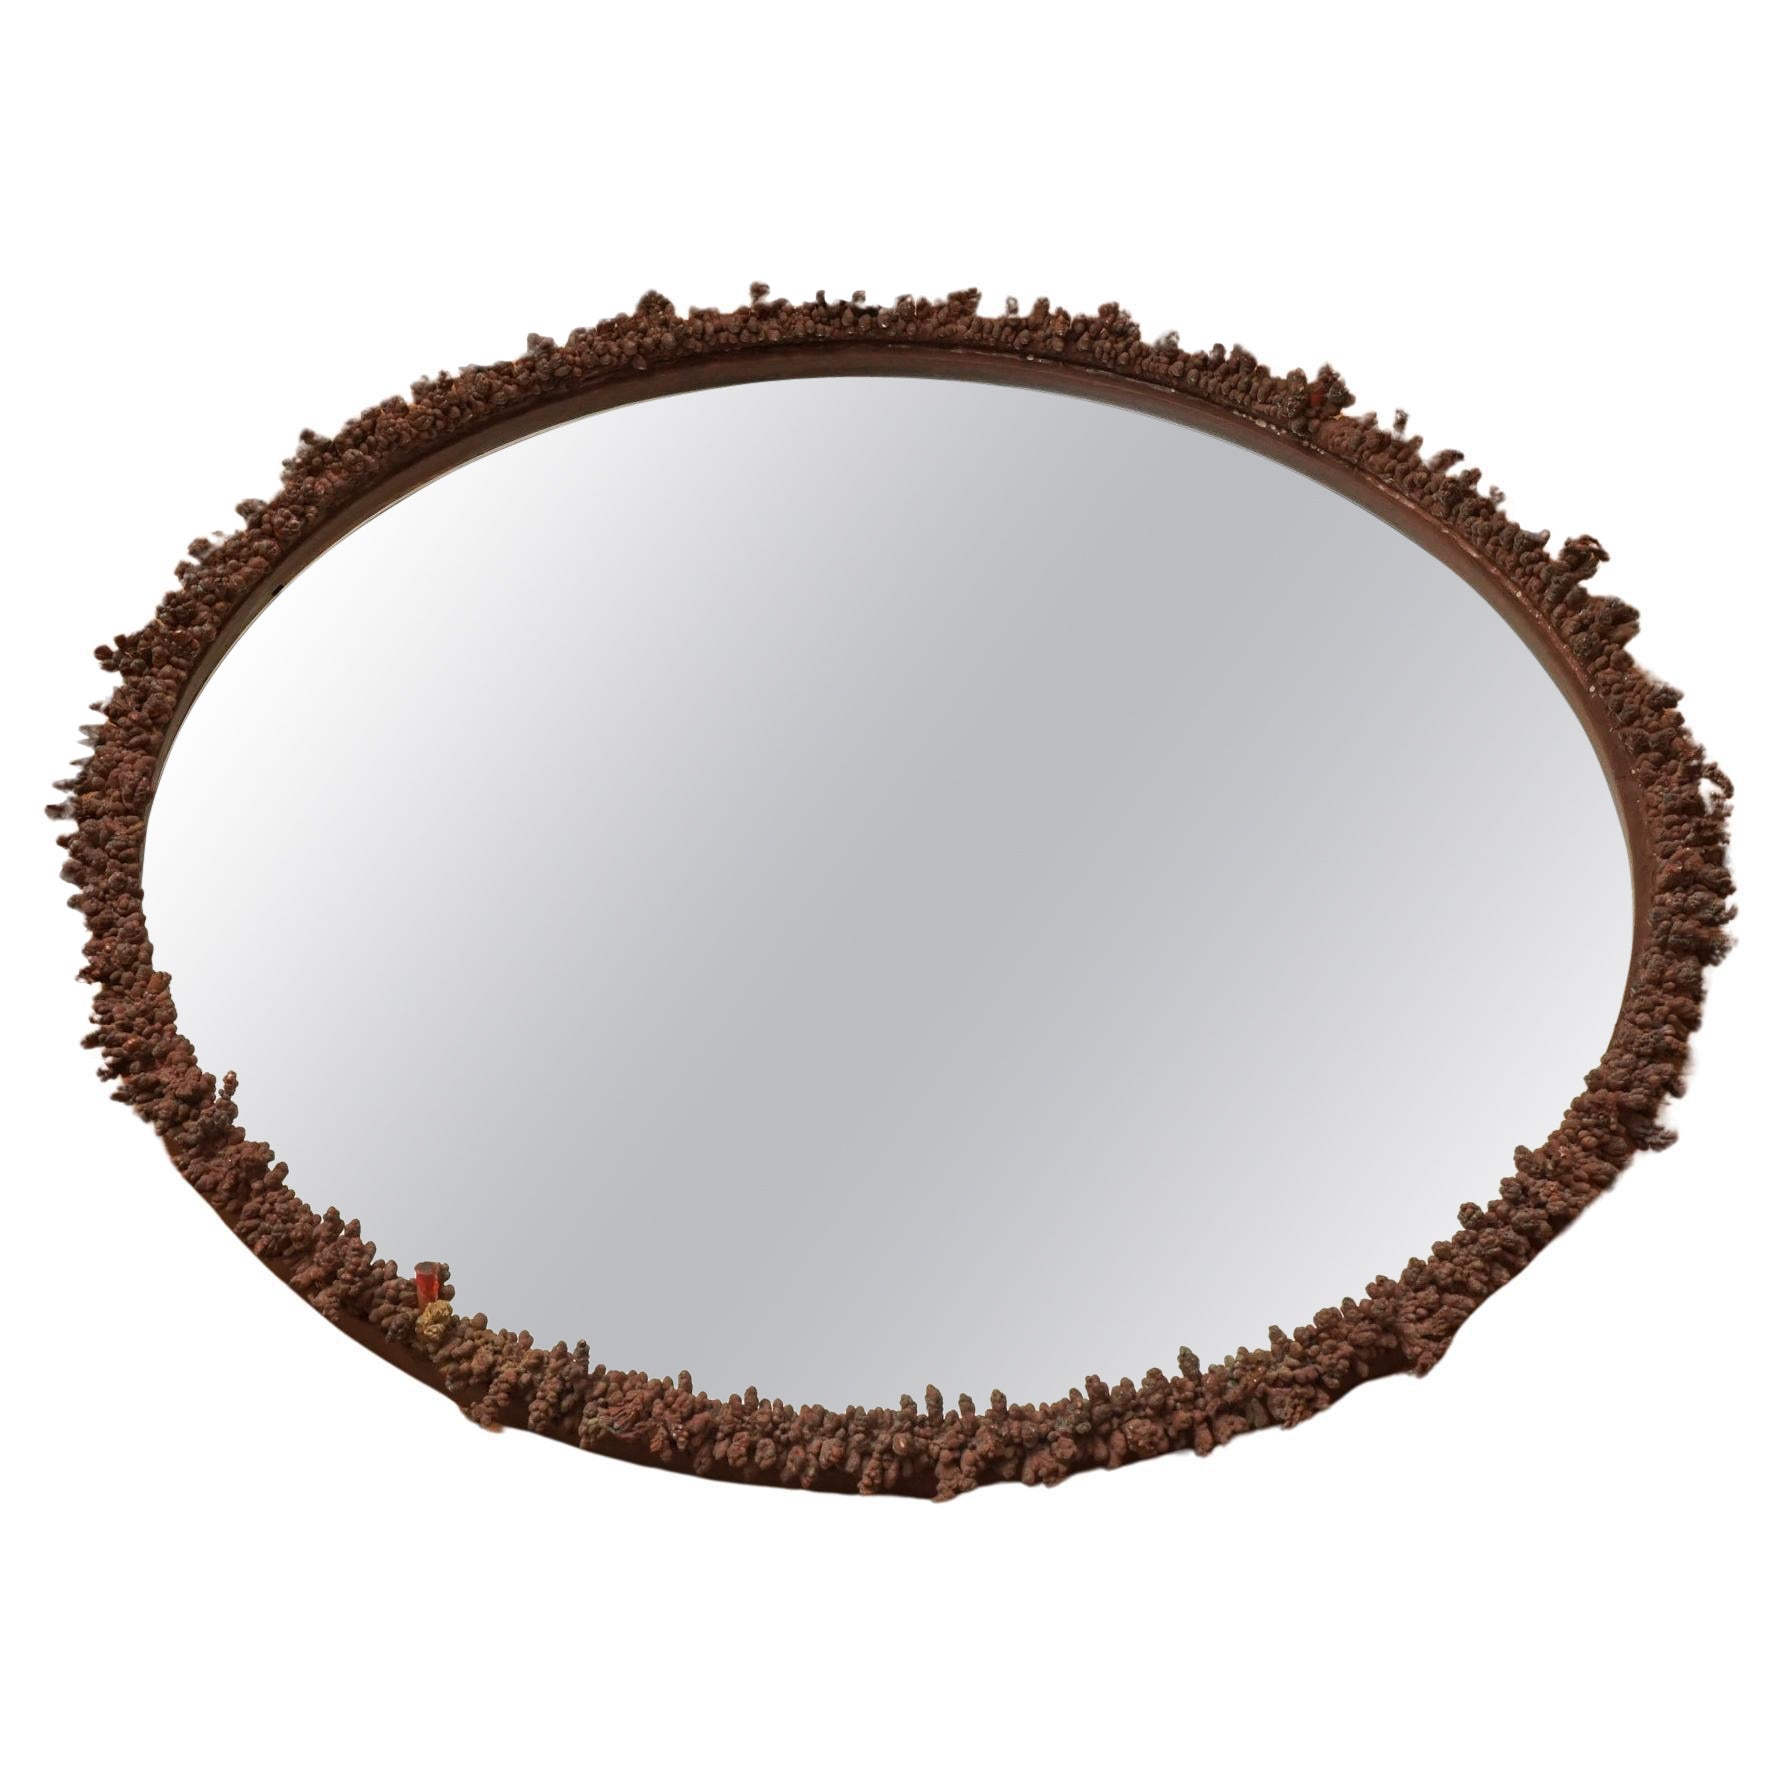 Decorative Iron Frame Mirror For Sale